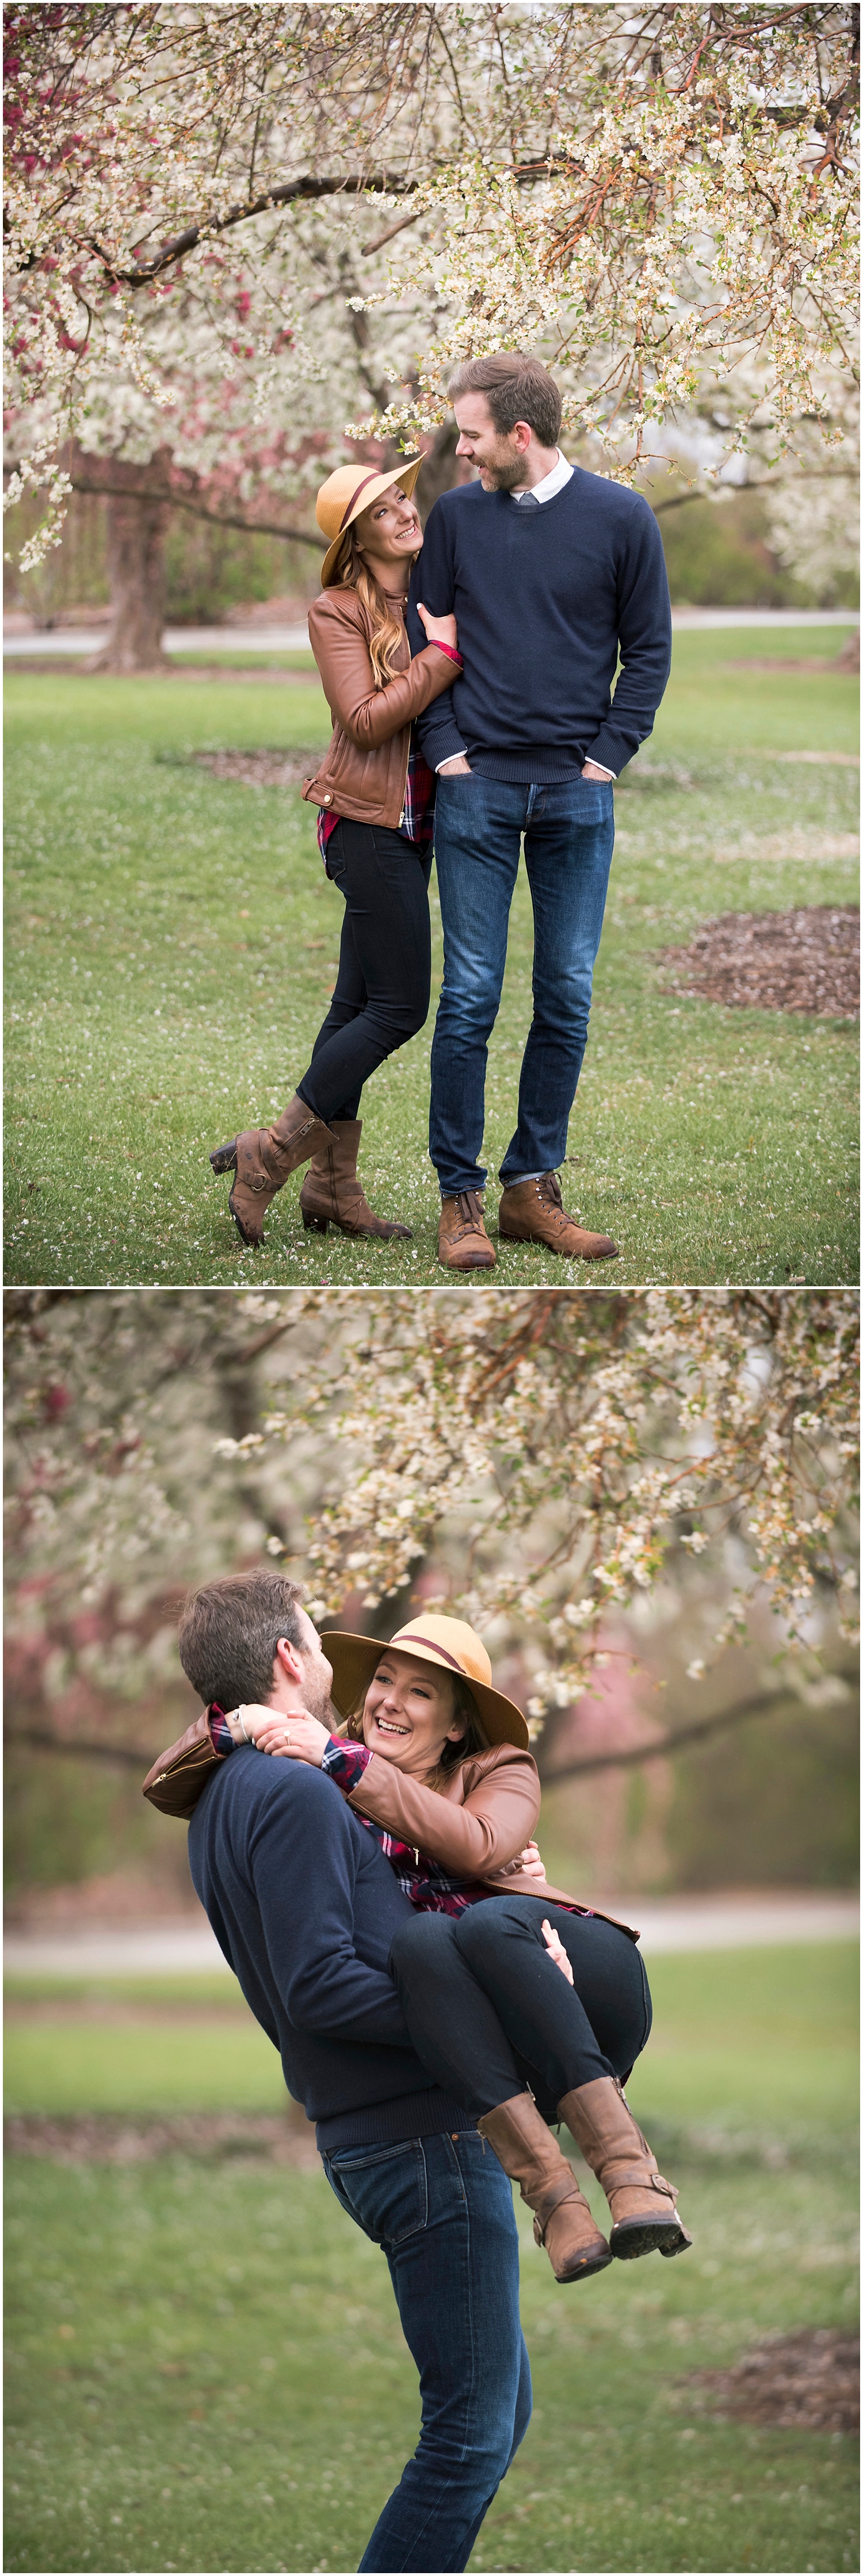 Romantic Photography Cherry Blossom Engagement Photos